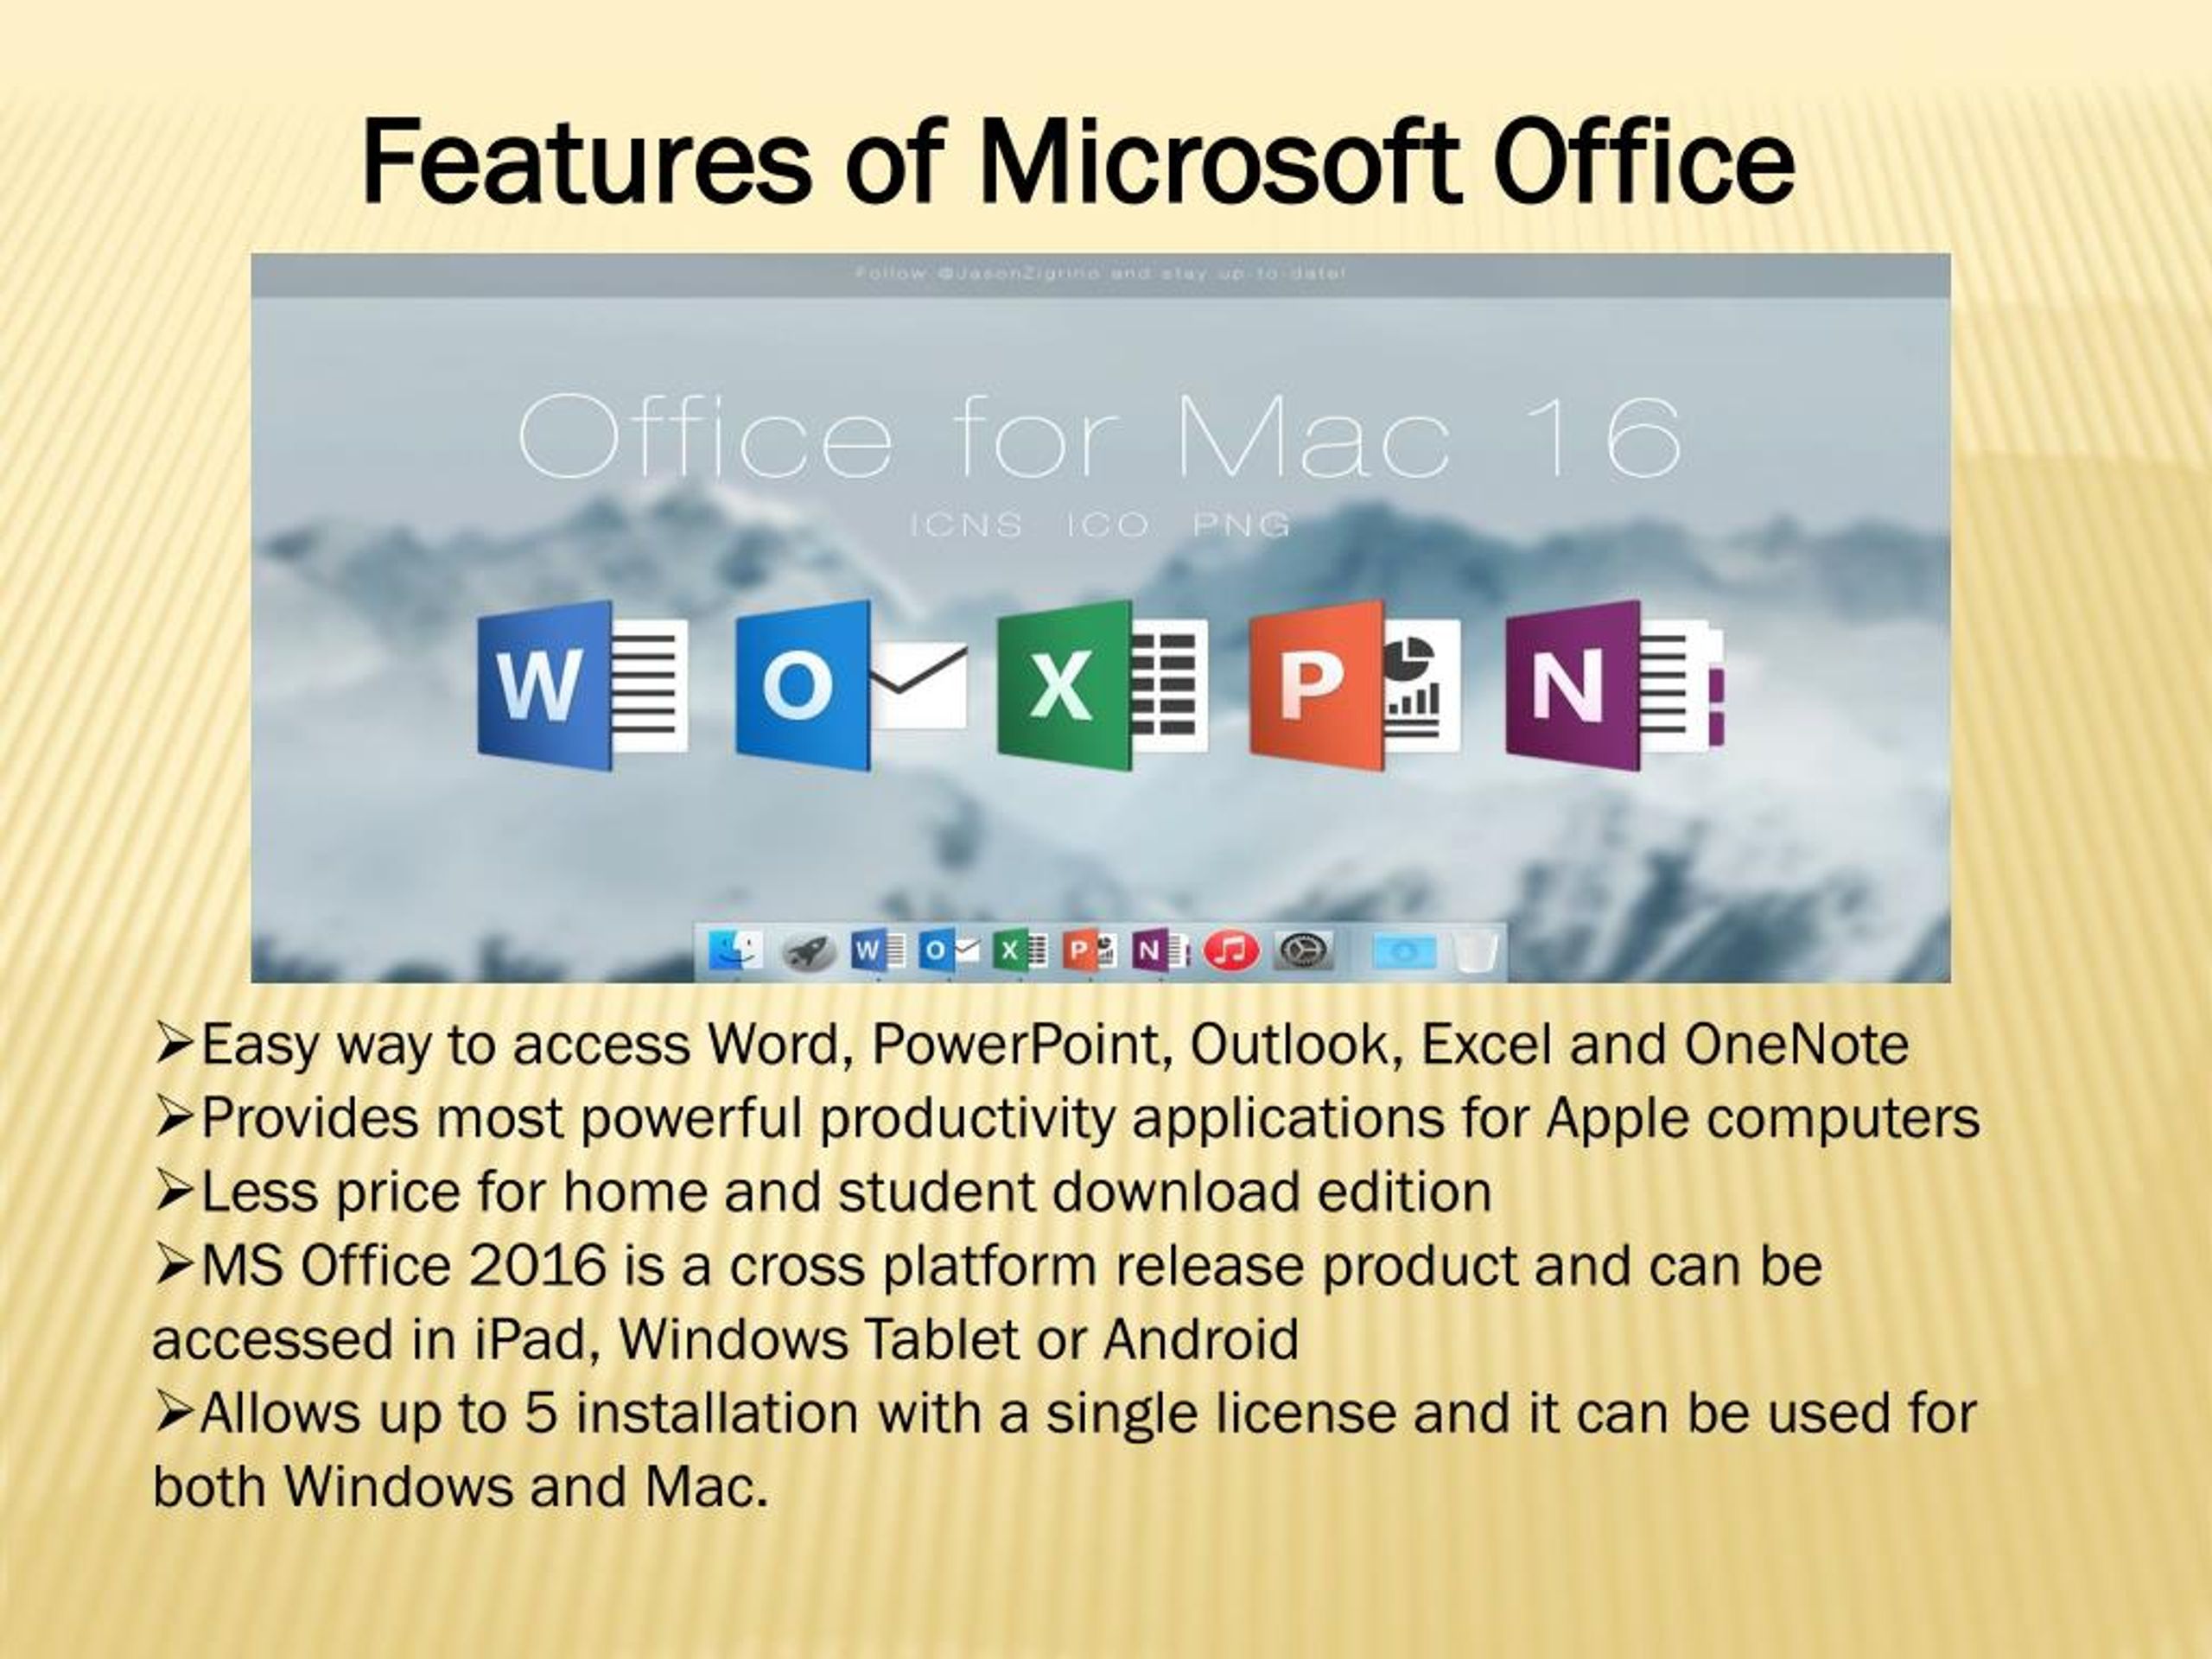 microsoft powerpoint mac 2016 free download